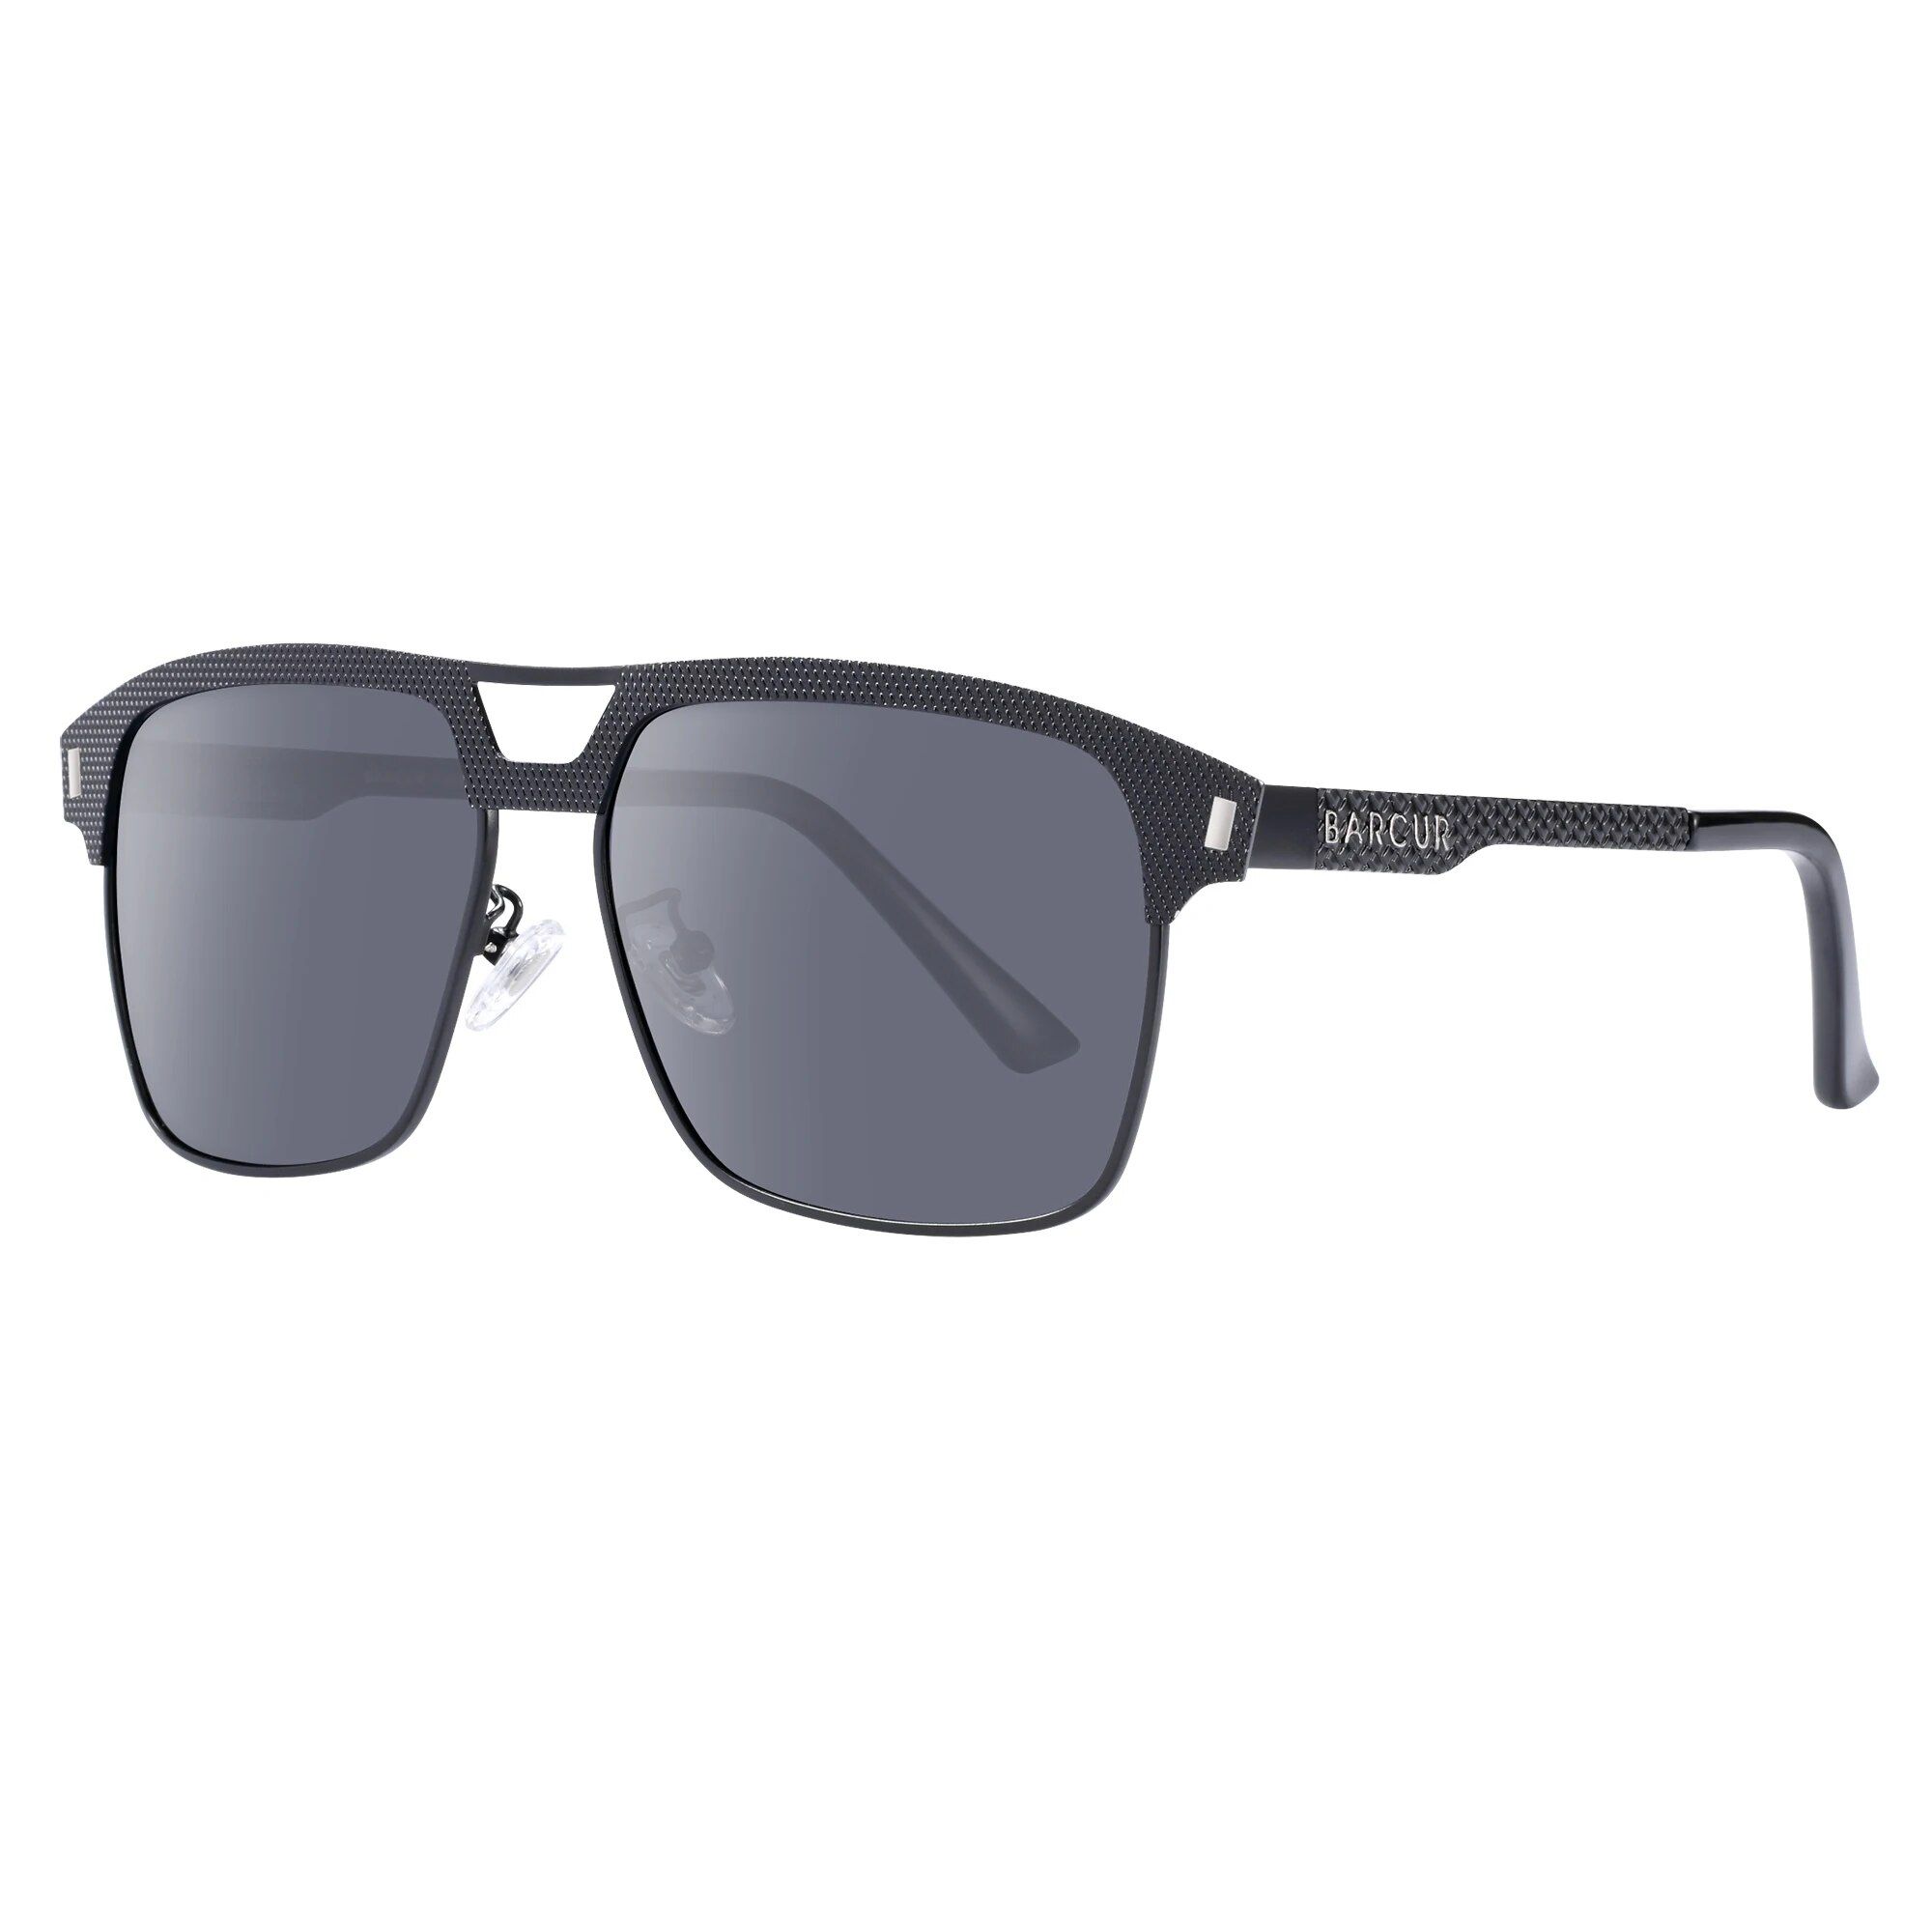 Stainless Square Polarized Sunglasses for Men